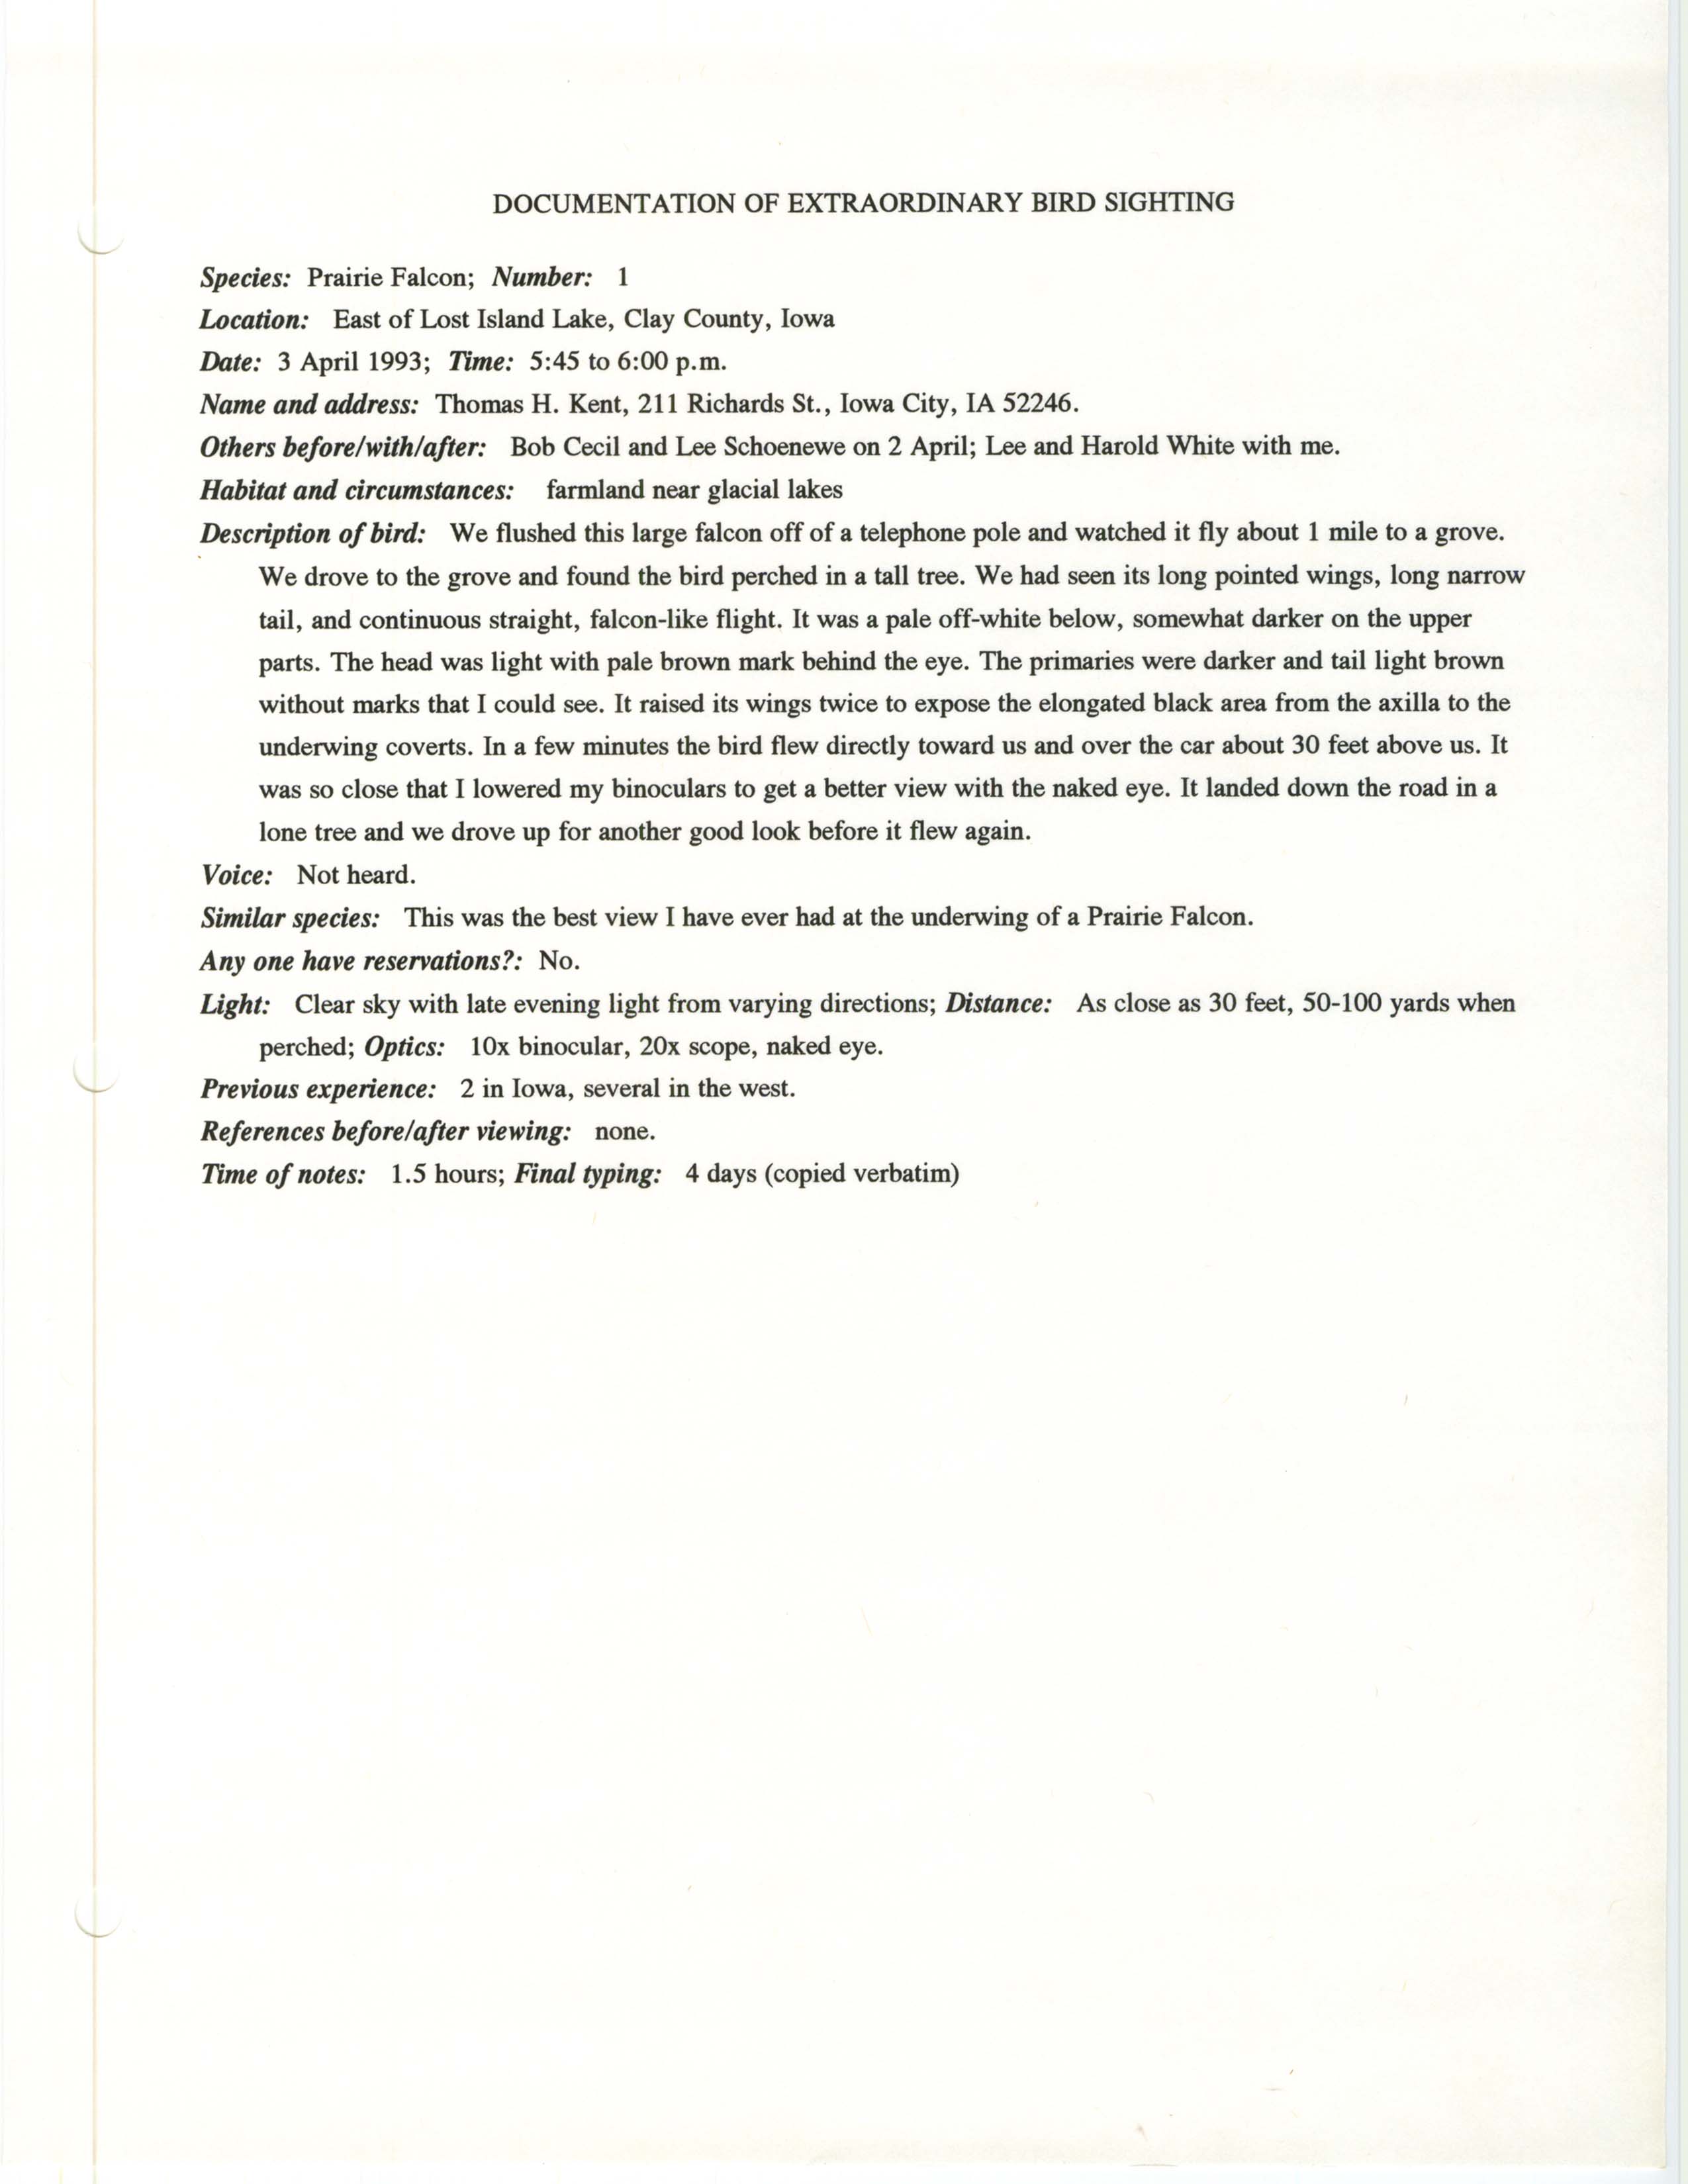 Rare bird documentation form for Prairie Falcon east of Lost Island Lake, 1993